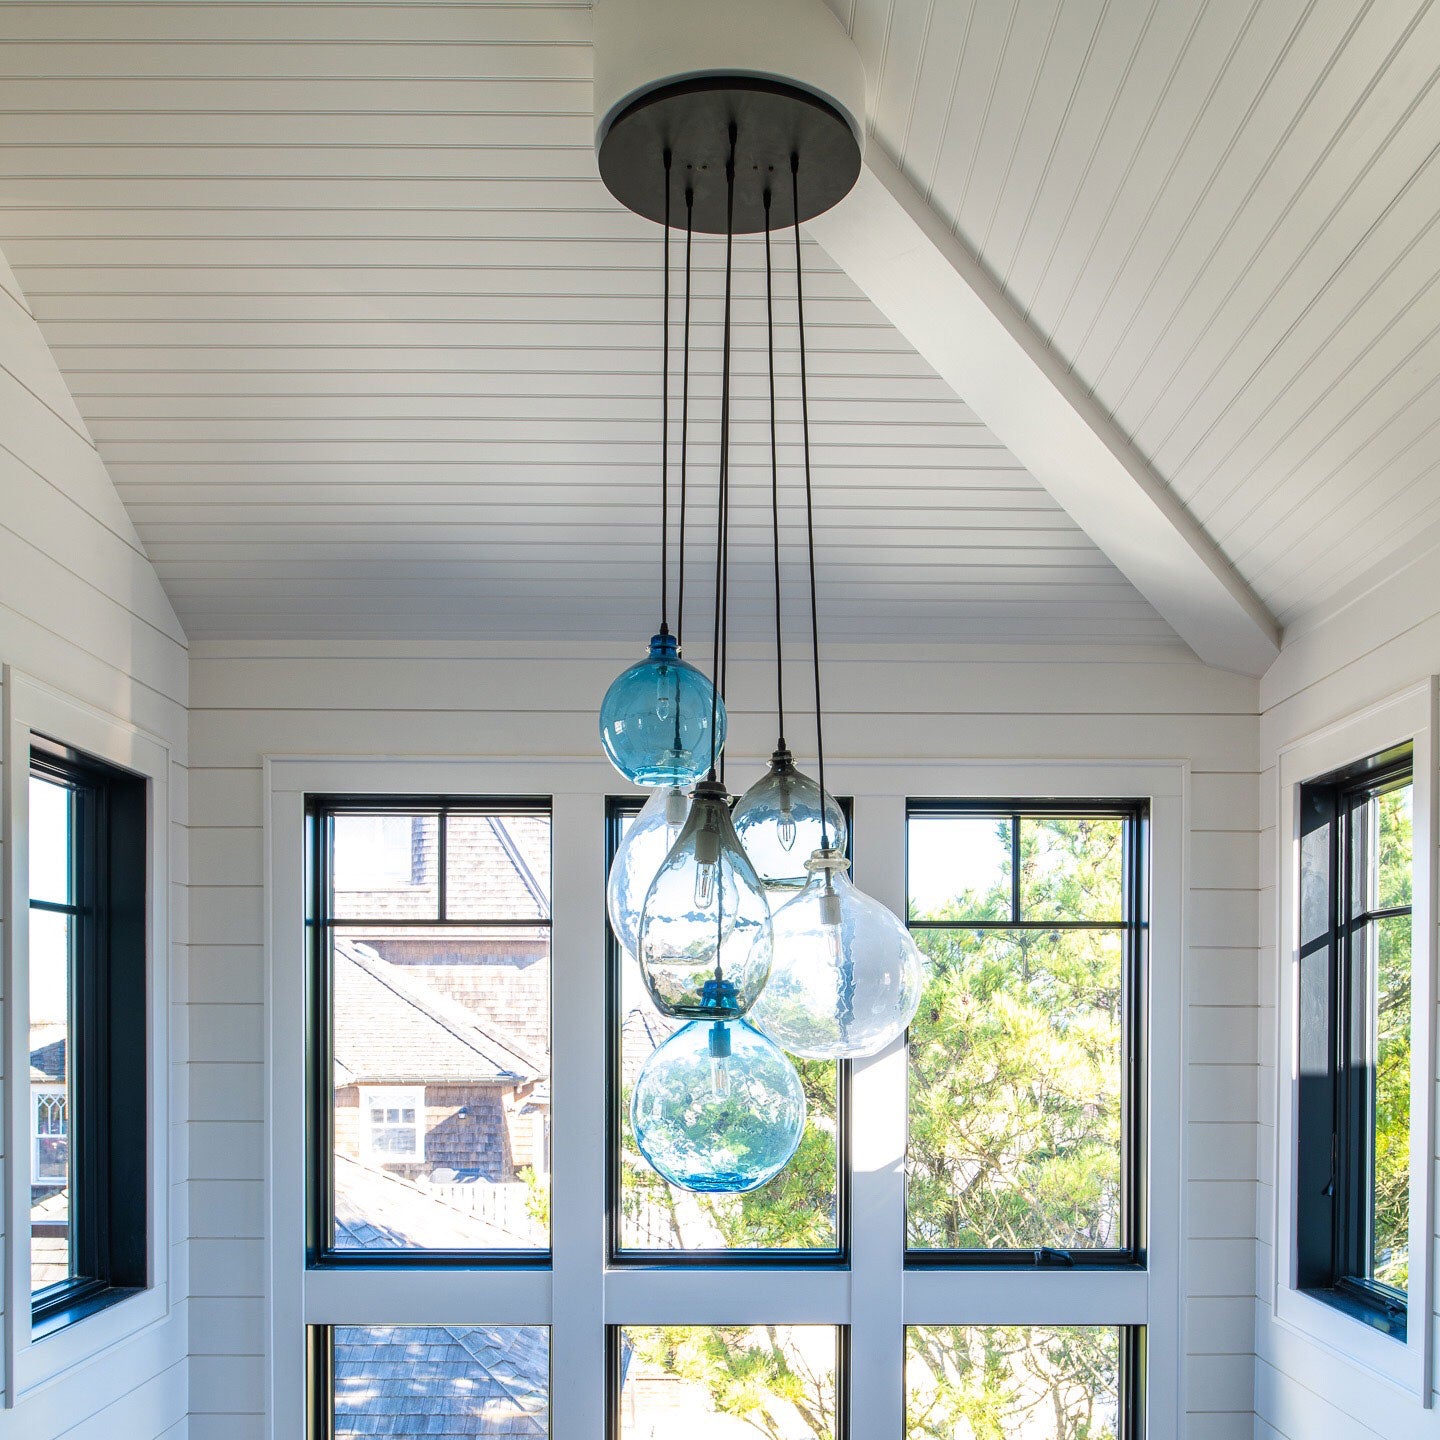  interior cieling shot of jug lamp glass pendants in cluster 